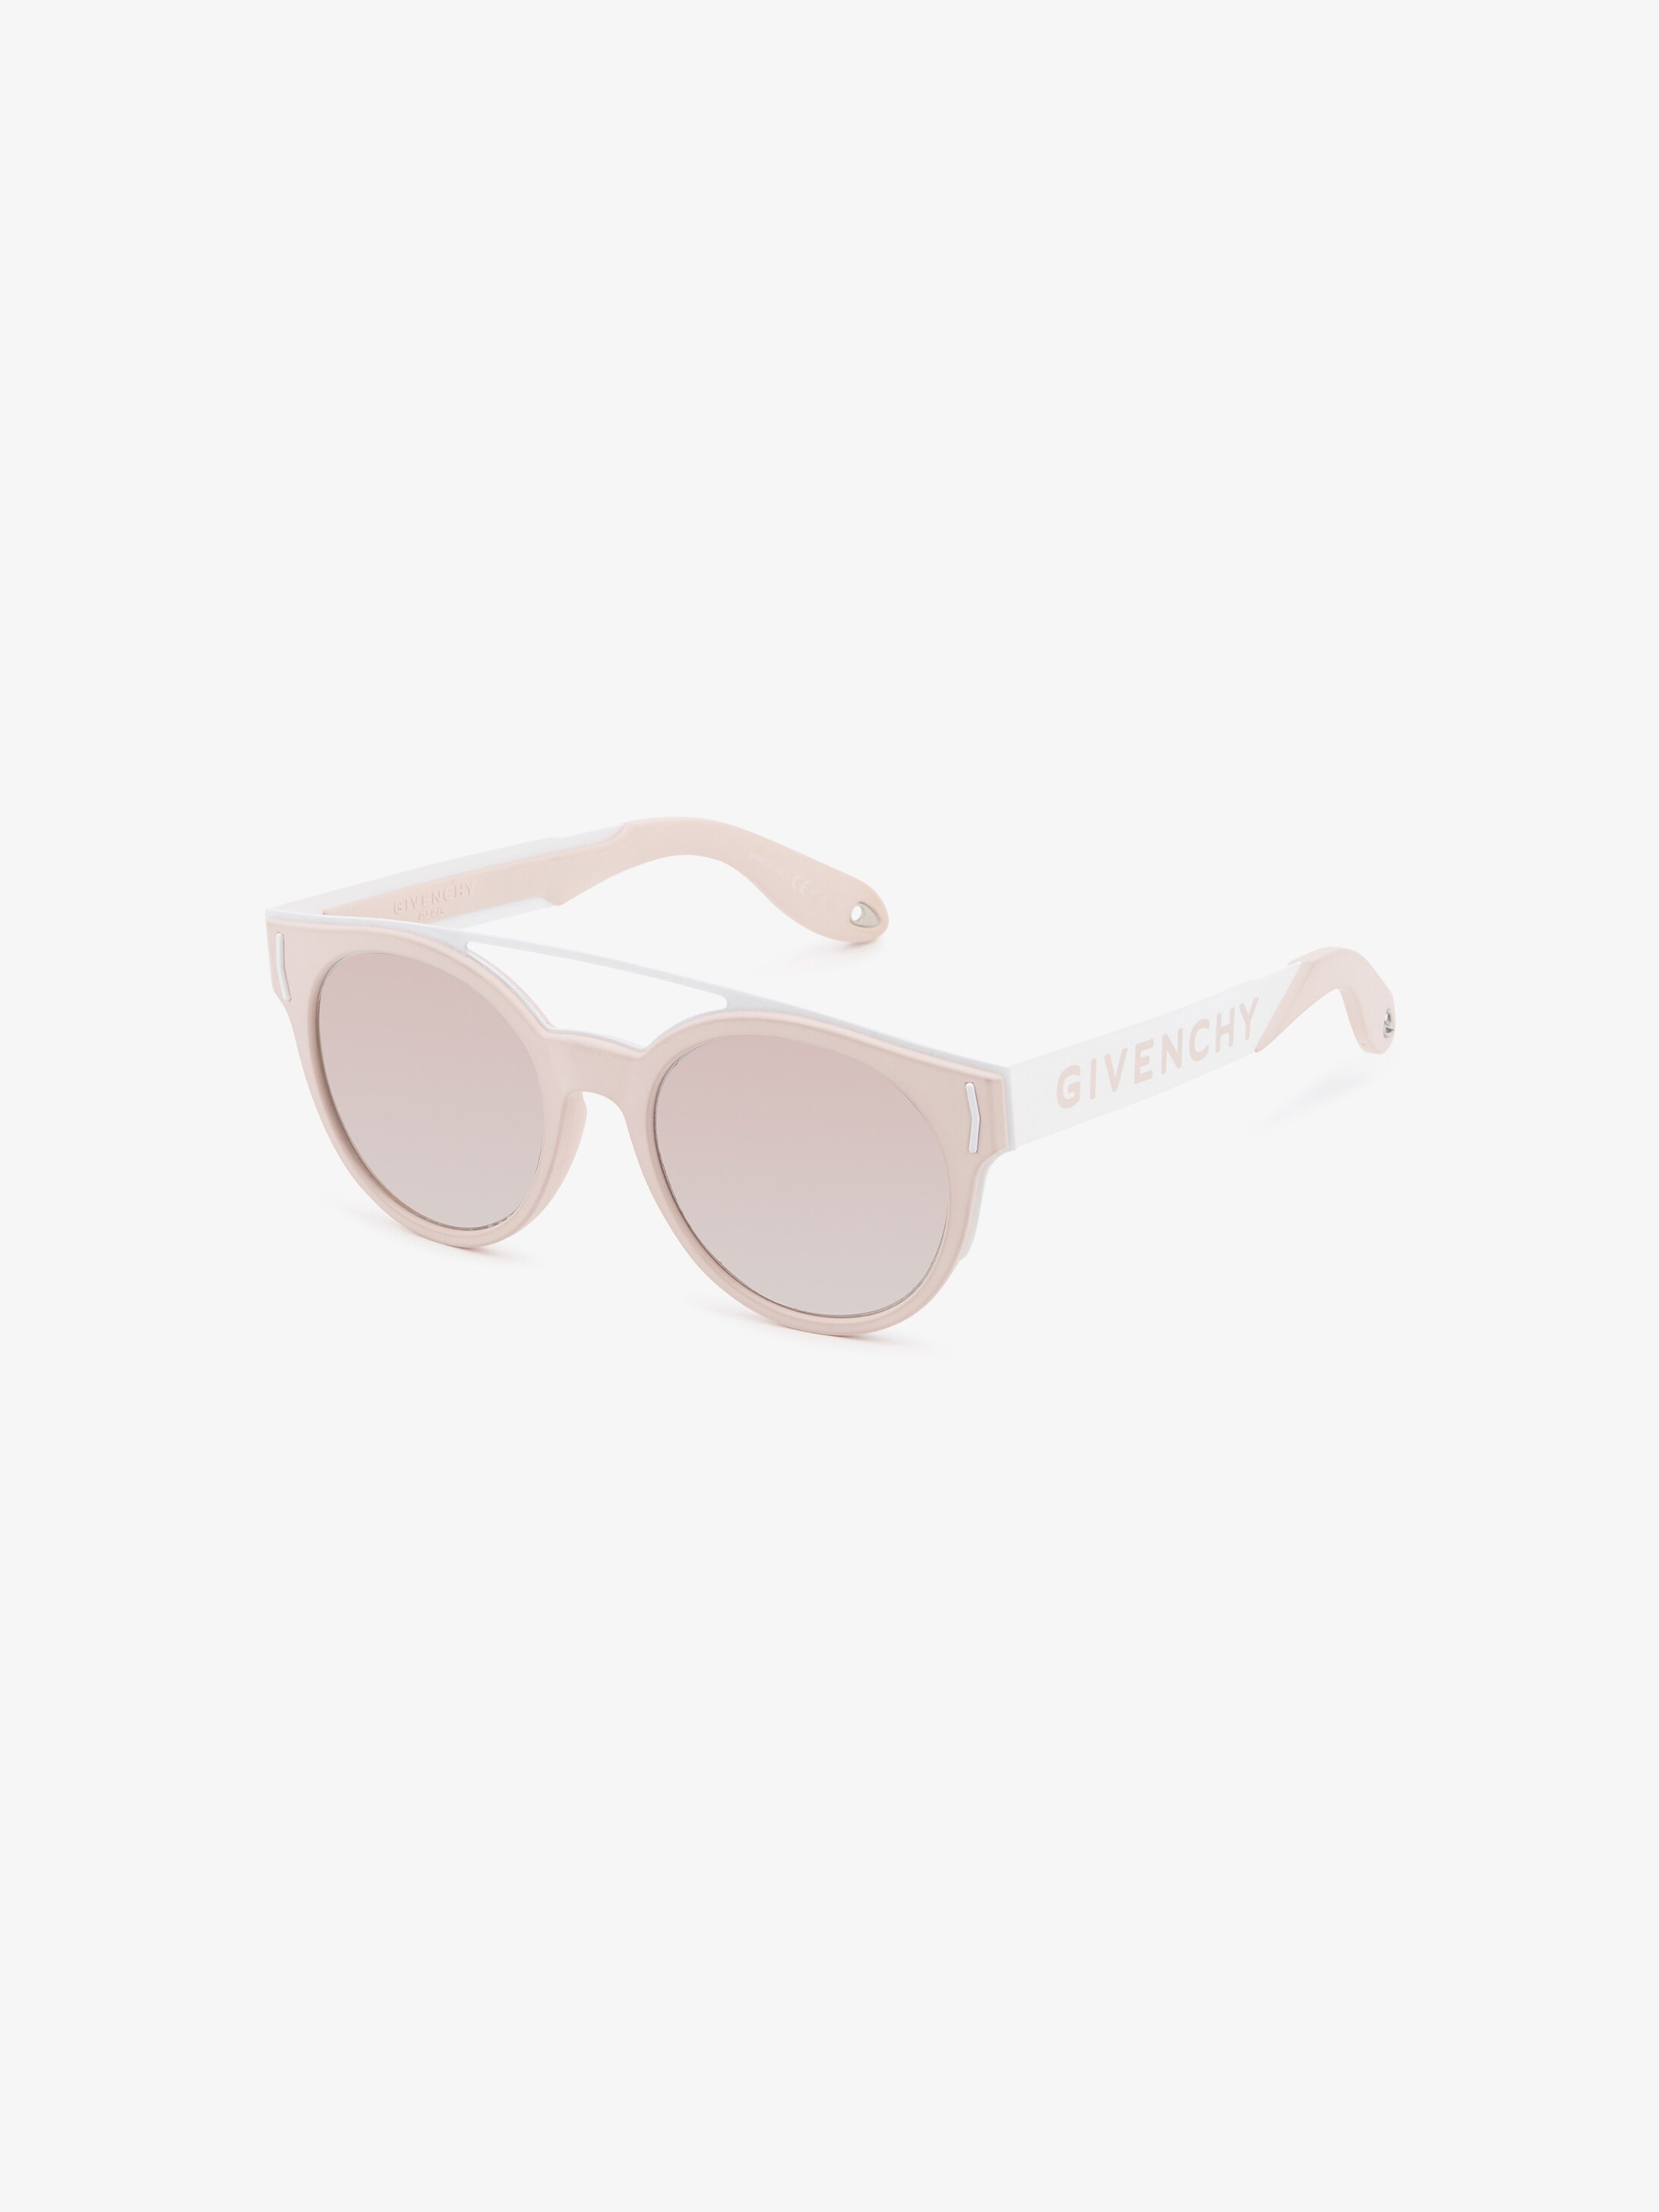 Givenchy logo sunglasses | GIVENCHY Paris